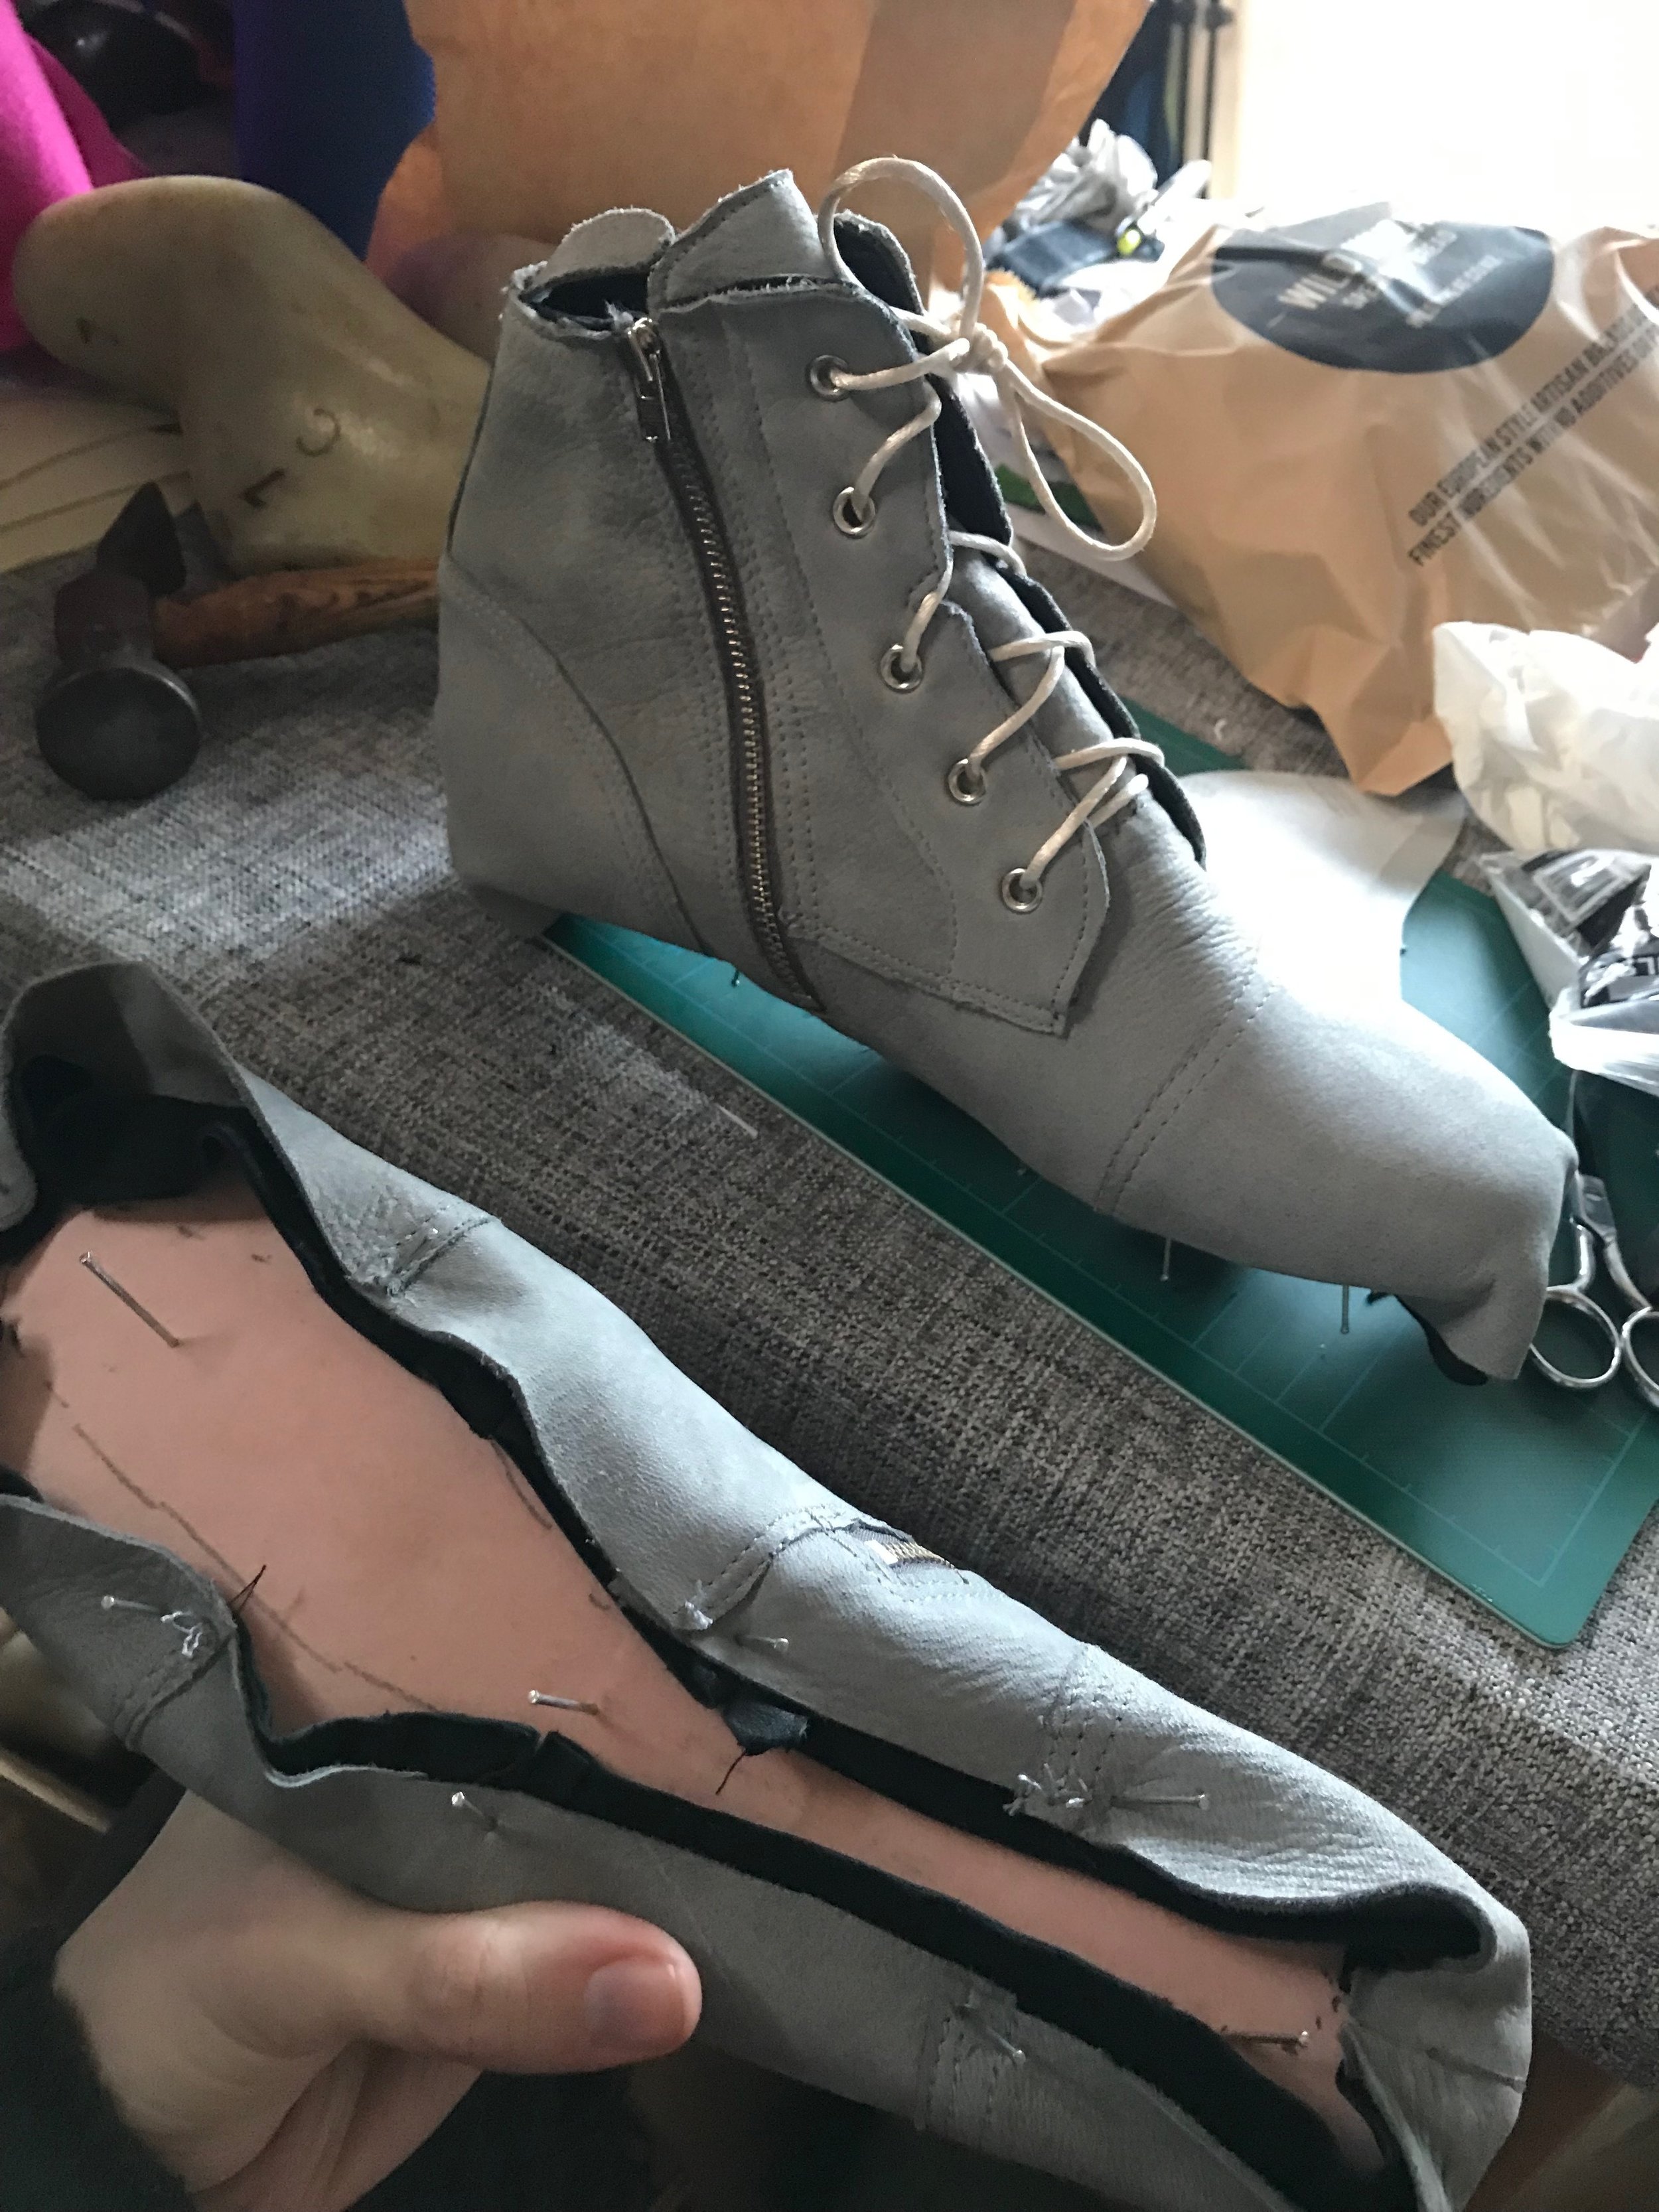 Shoemaking: Lasting the Shoes — Kat Makes